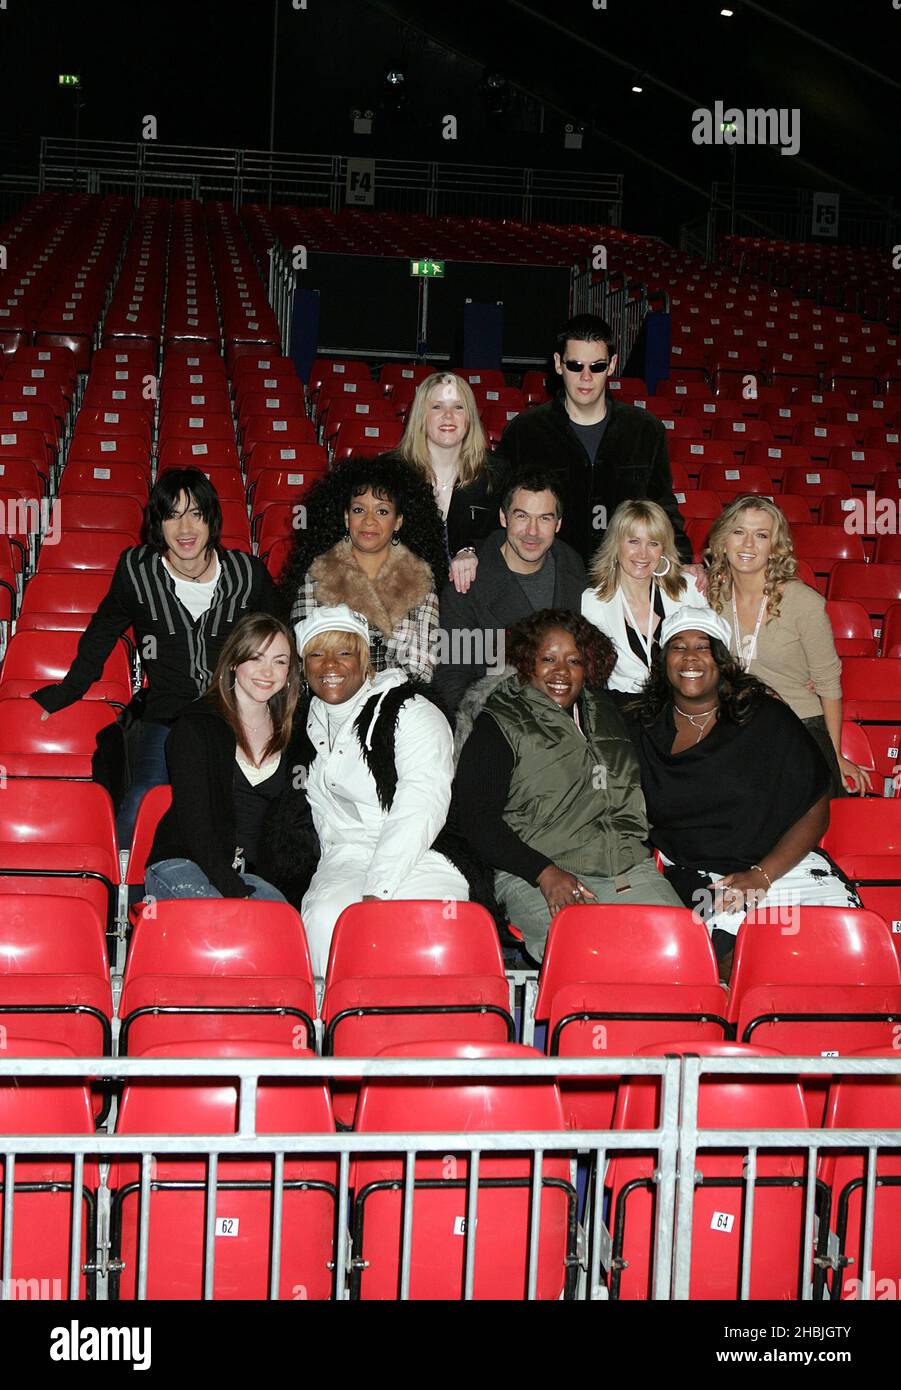 2 To Go; Tabby Callaghan; Rowetta Satchell; Steve Brookstein; Verity Keays; Roberta Howett; Cassie Compton; Voices with Soul posan en una foto antes de la primera noche de esta noche de 'X Factor Live Tour' en el Pabellón de Wembley Arena el 20 de febrero de 2005 en Londres. Foto de stock